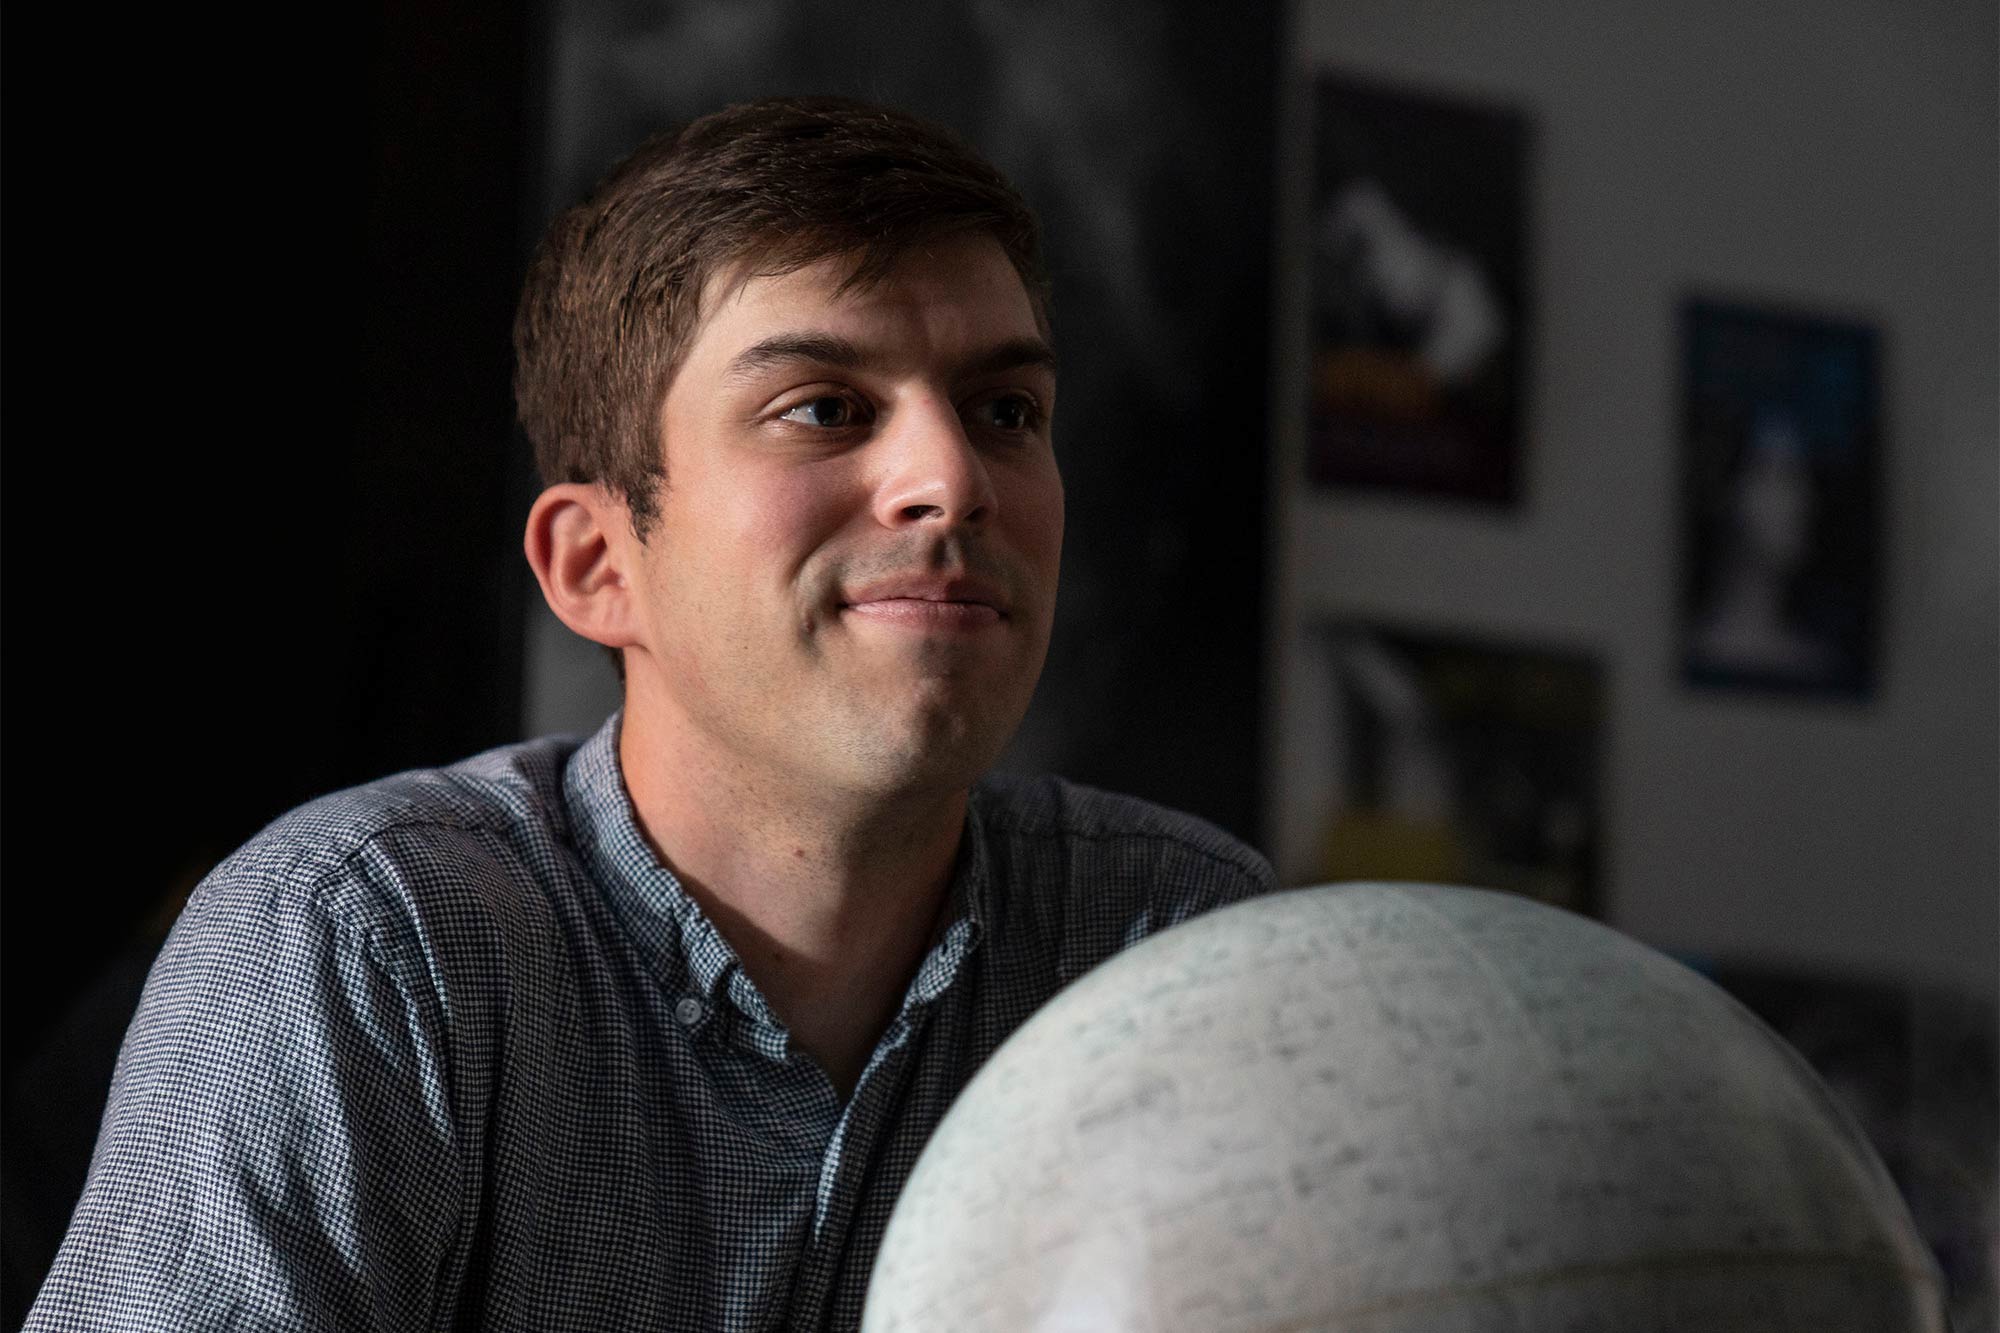 Matt Pryal, behind a lunar globe, looks off camera and smiles